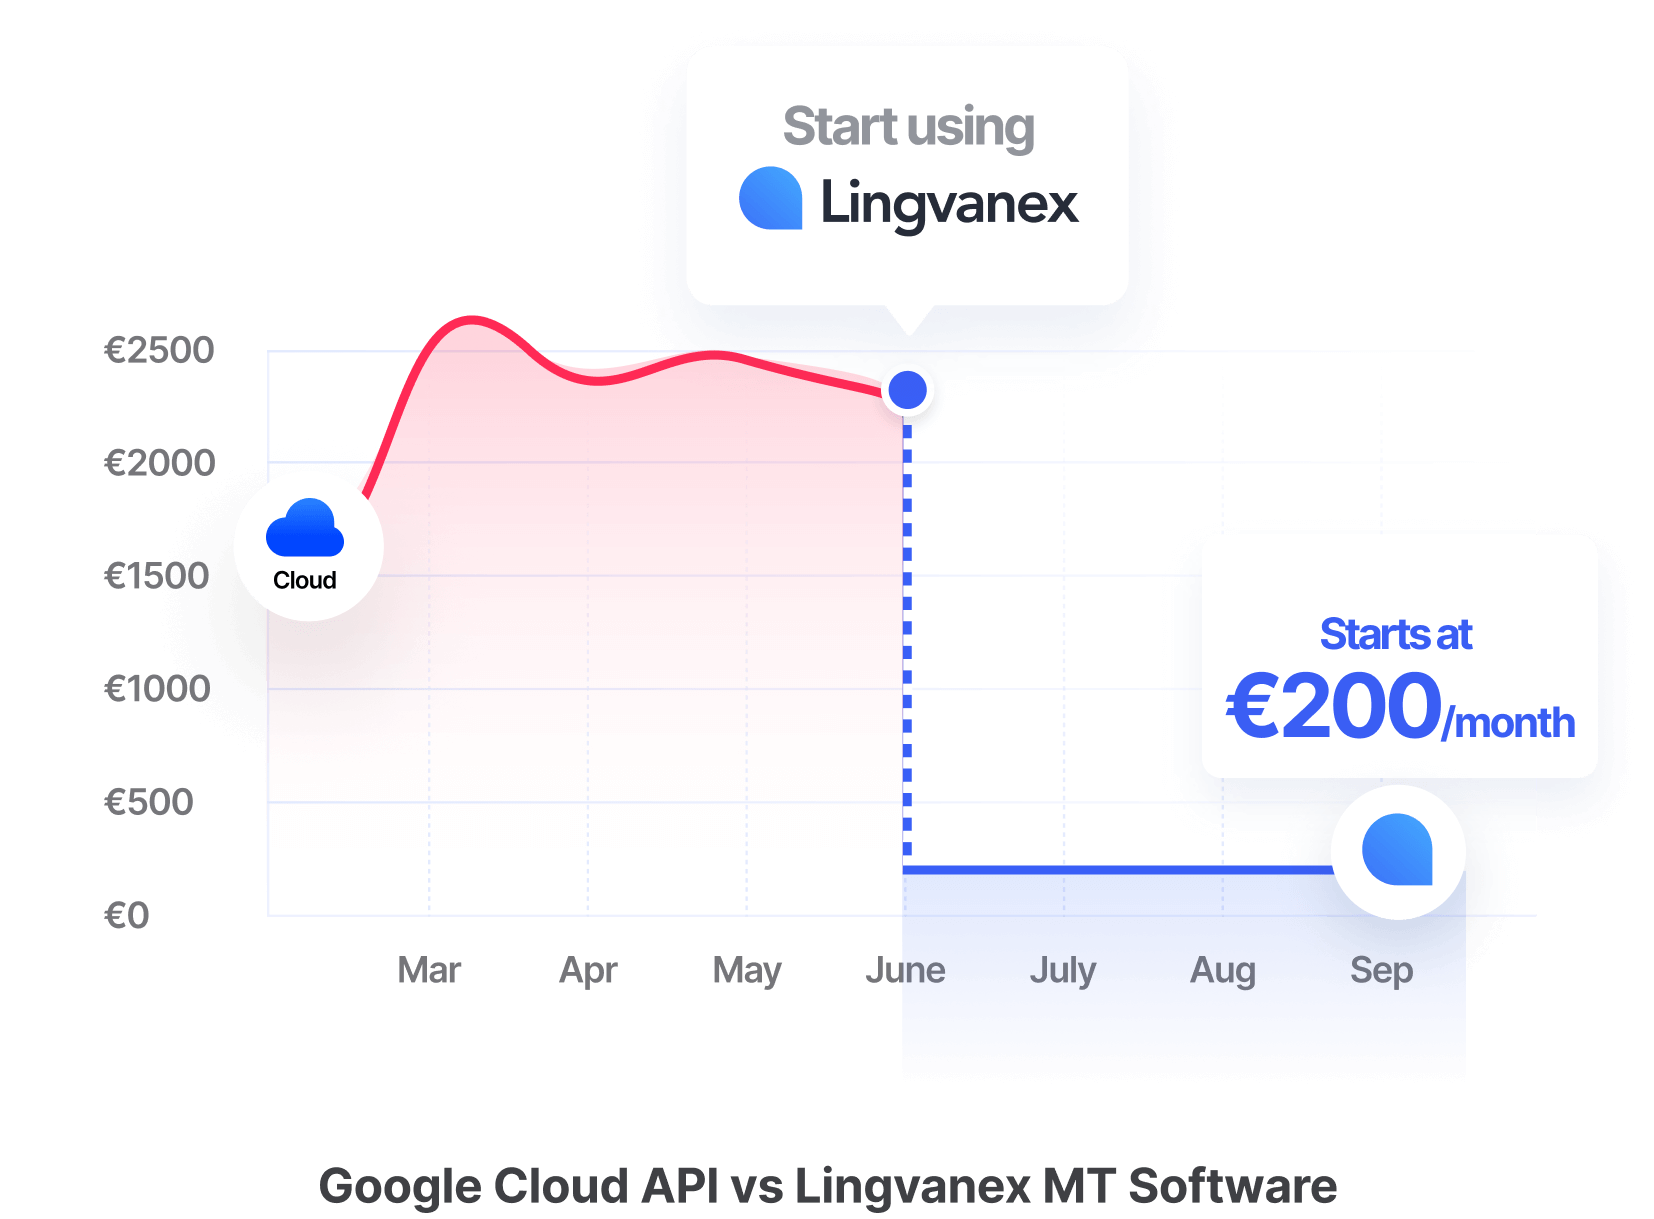 Google Cloud API vs Logiciel de Traduction Automatique de Lingvanex